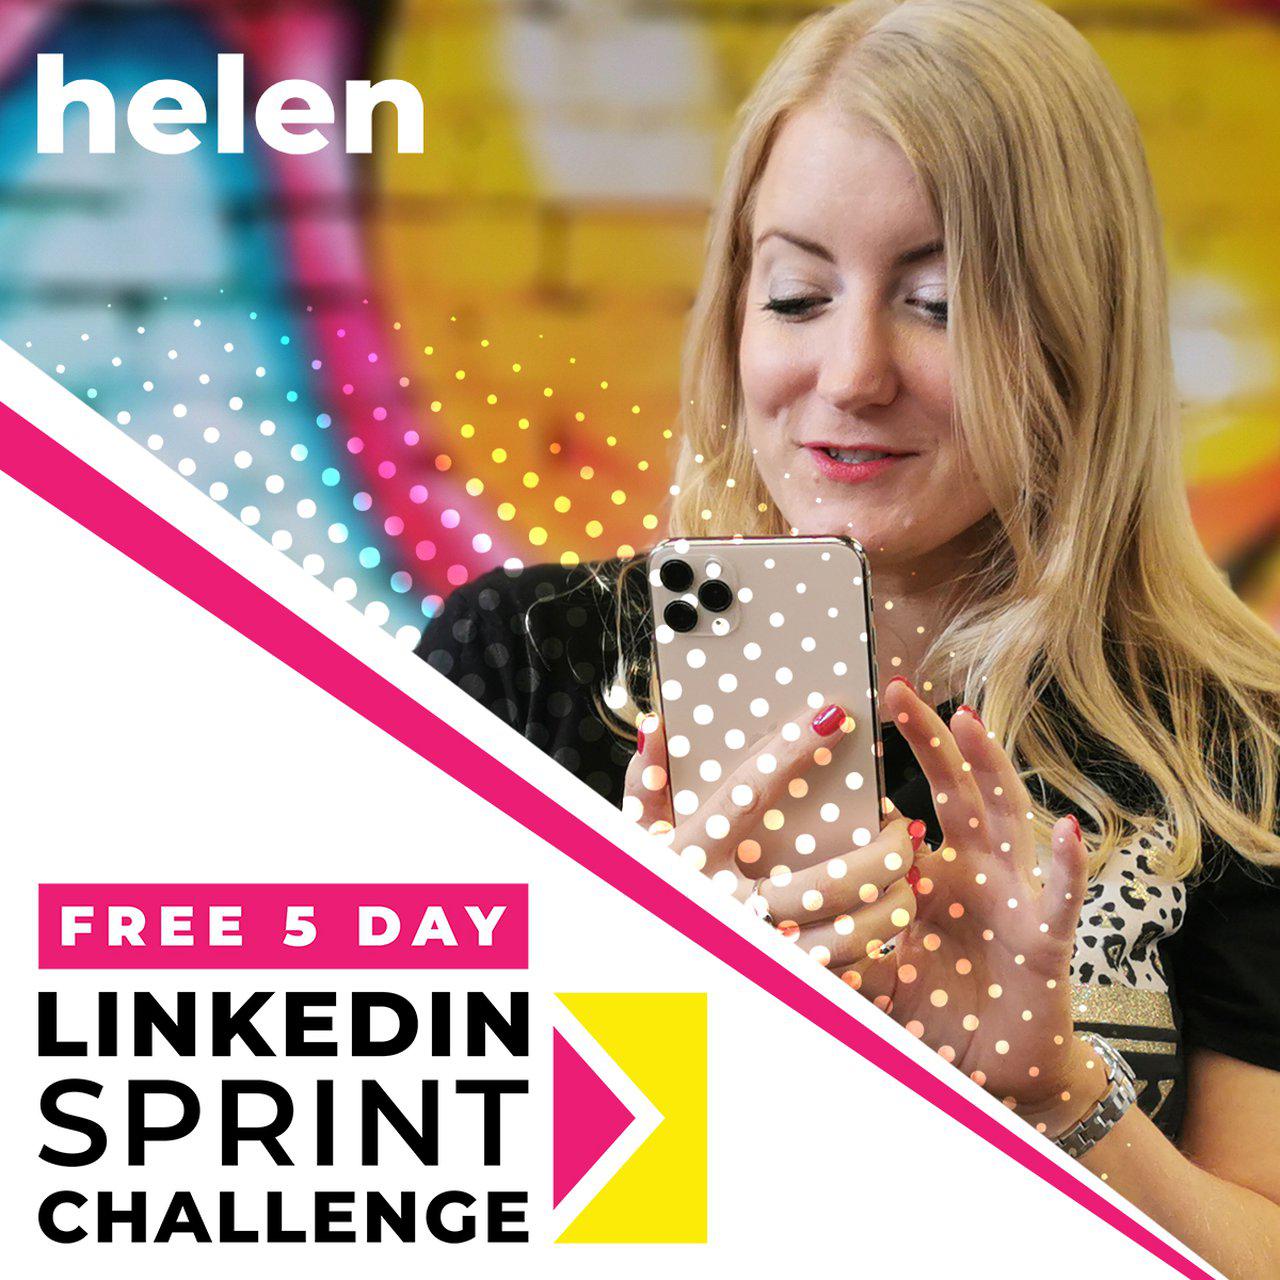 Free 5 day LinkedIn sprint challenge